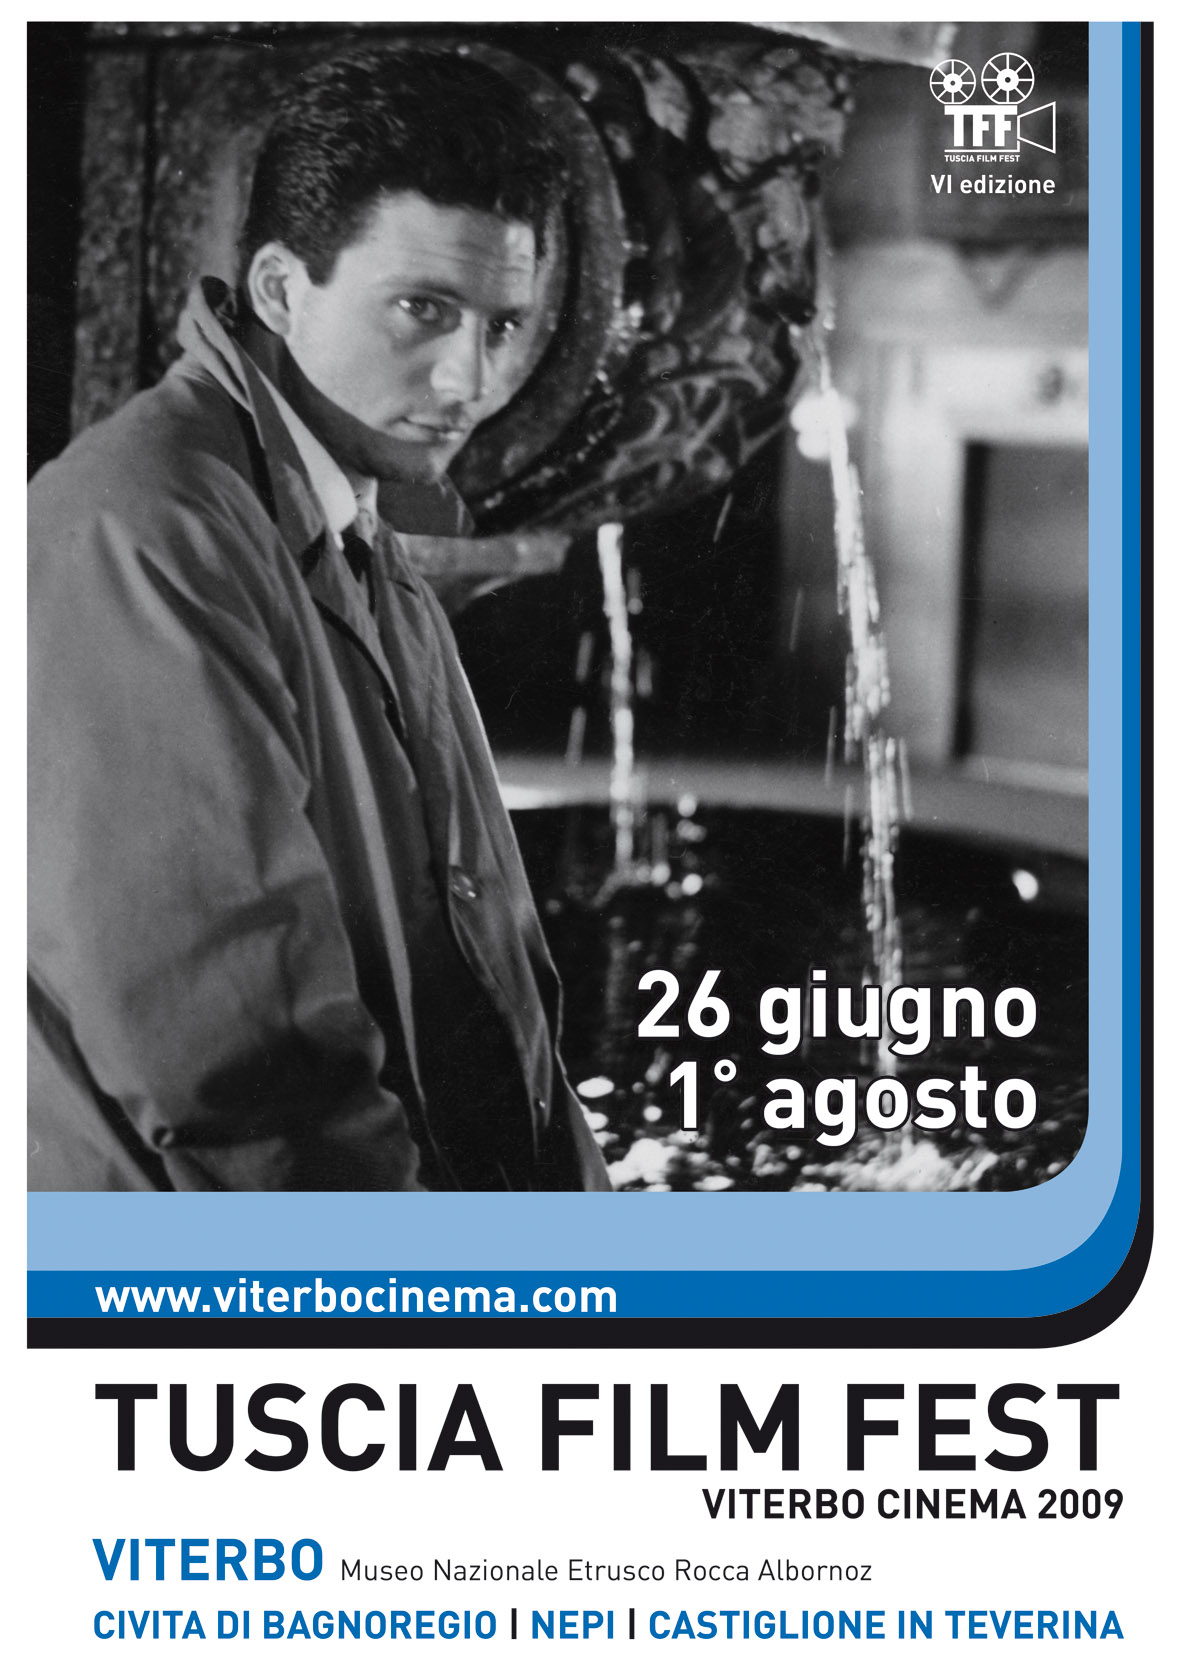 TFF 2009: Tuscia Film Fest-Viterbo Cinema